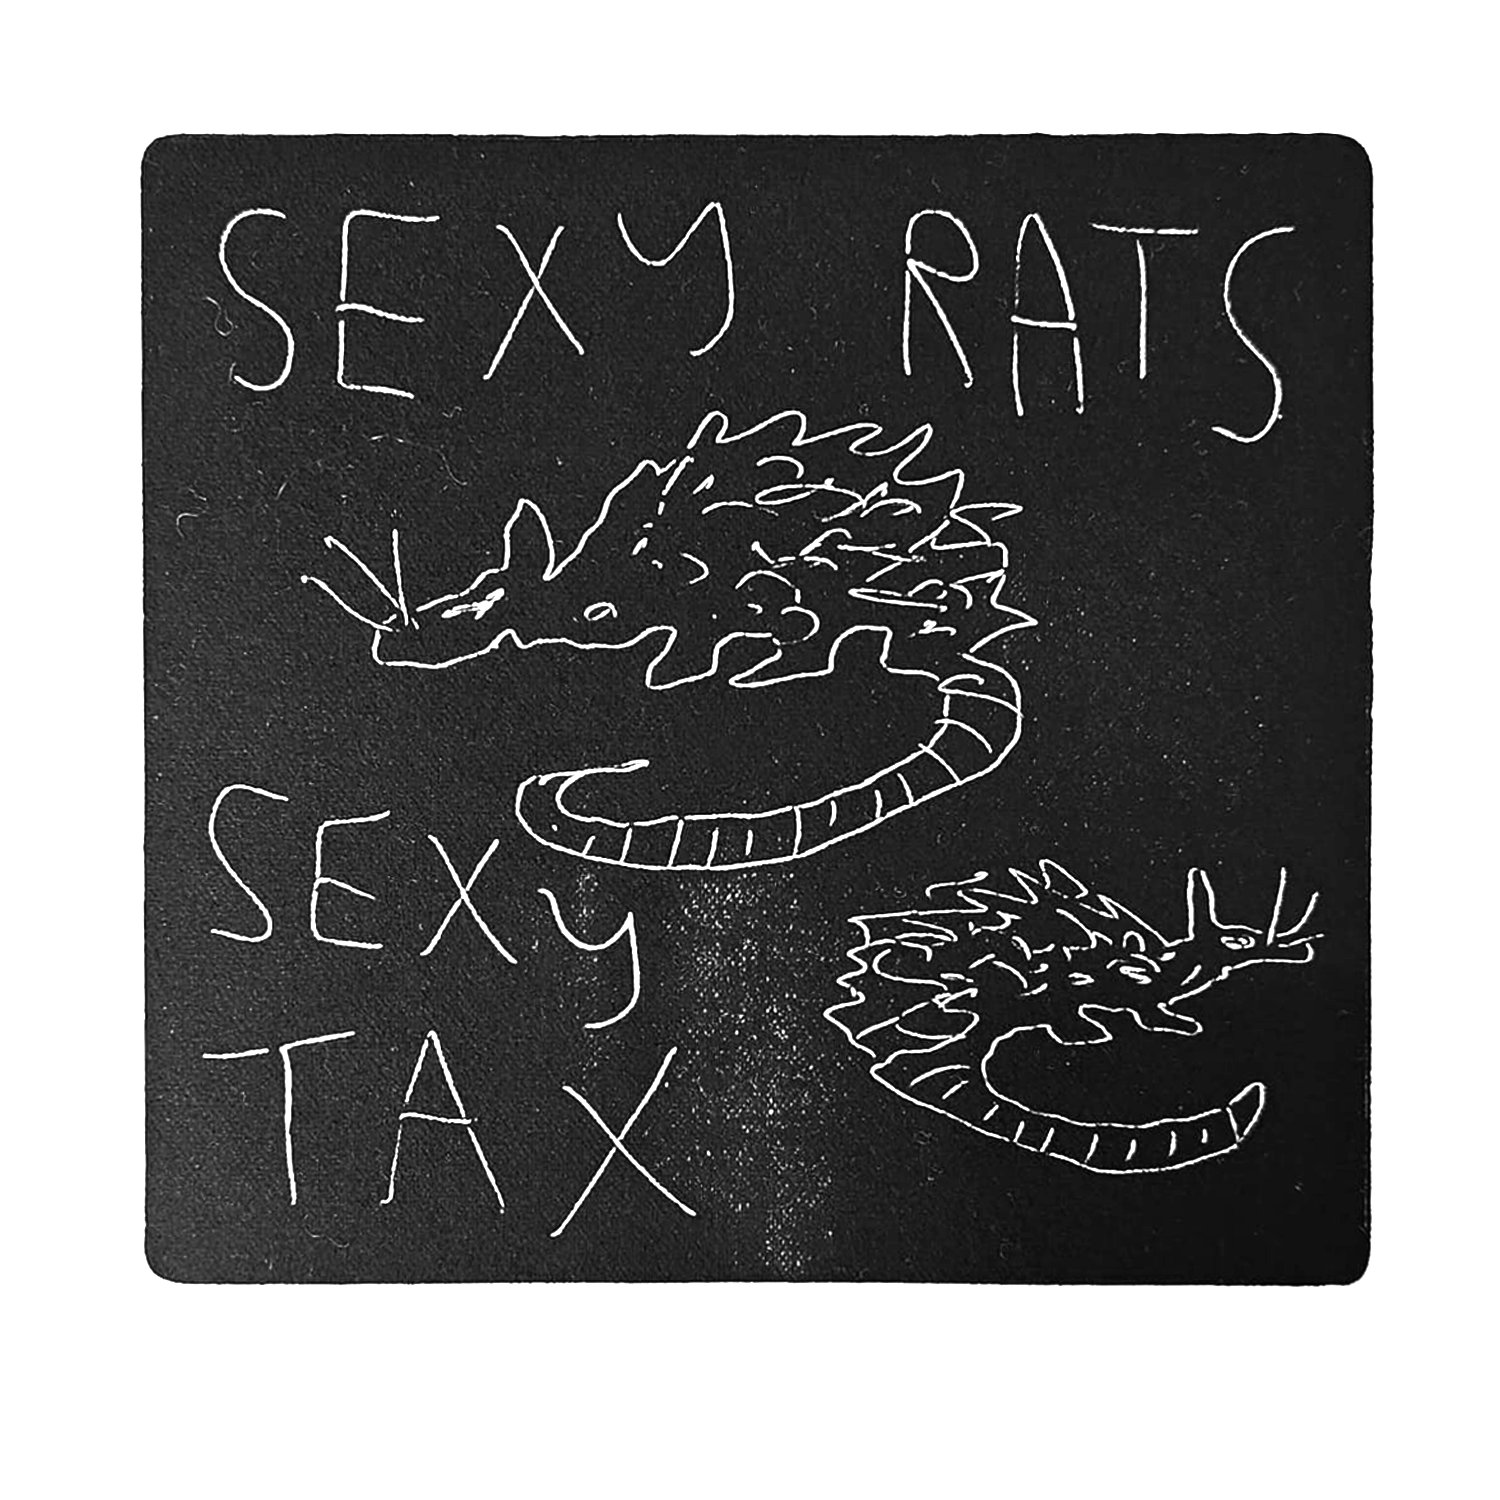 “Rat sex”